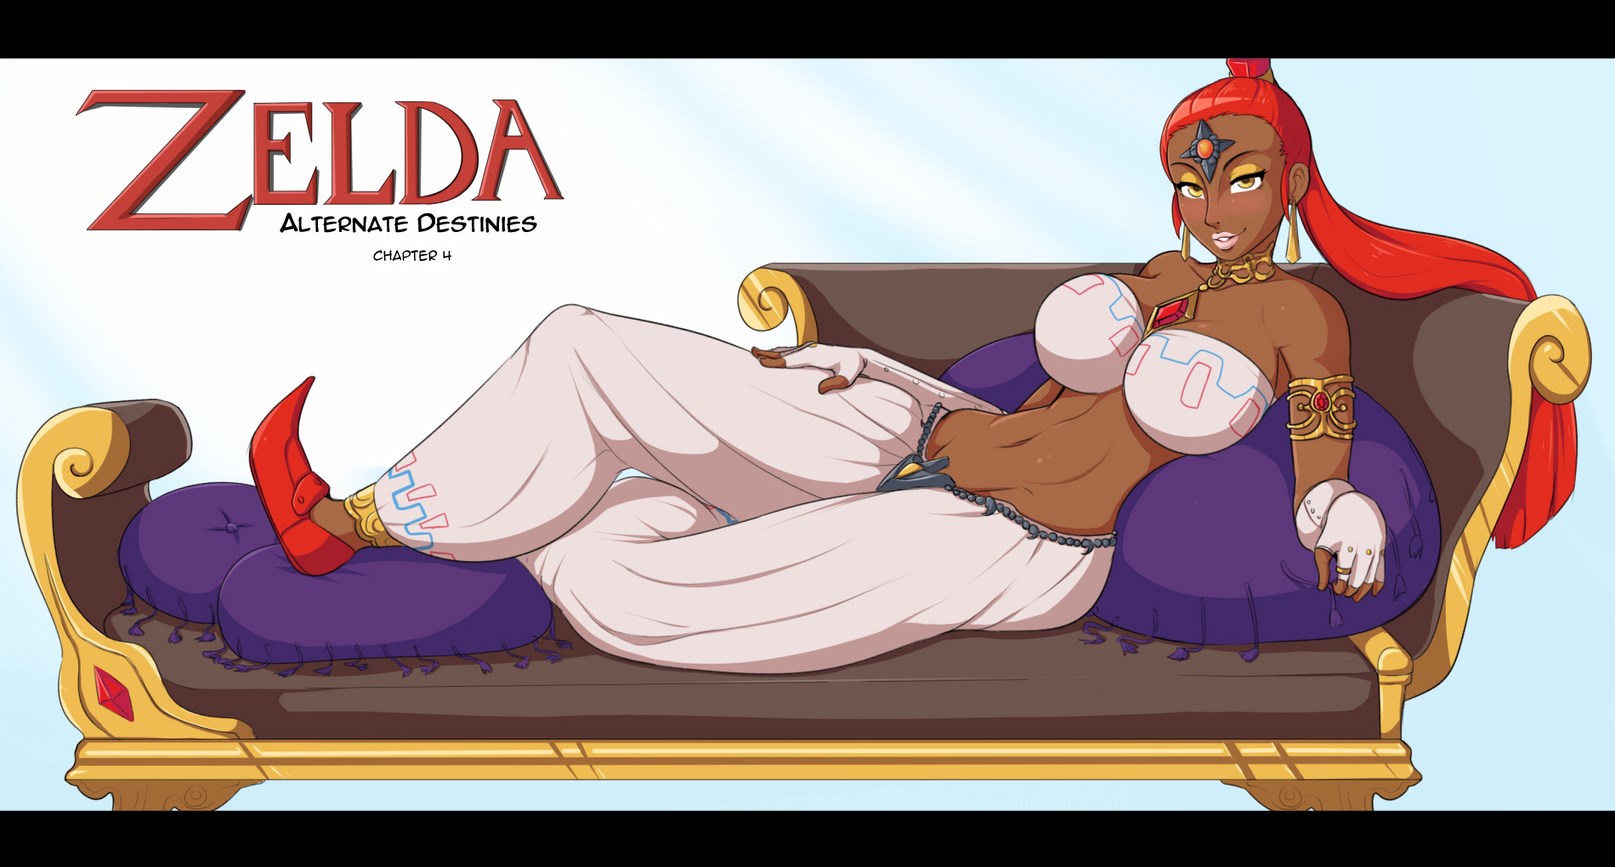 Legend of zelda alternate destiny afrobull porn comics